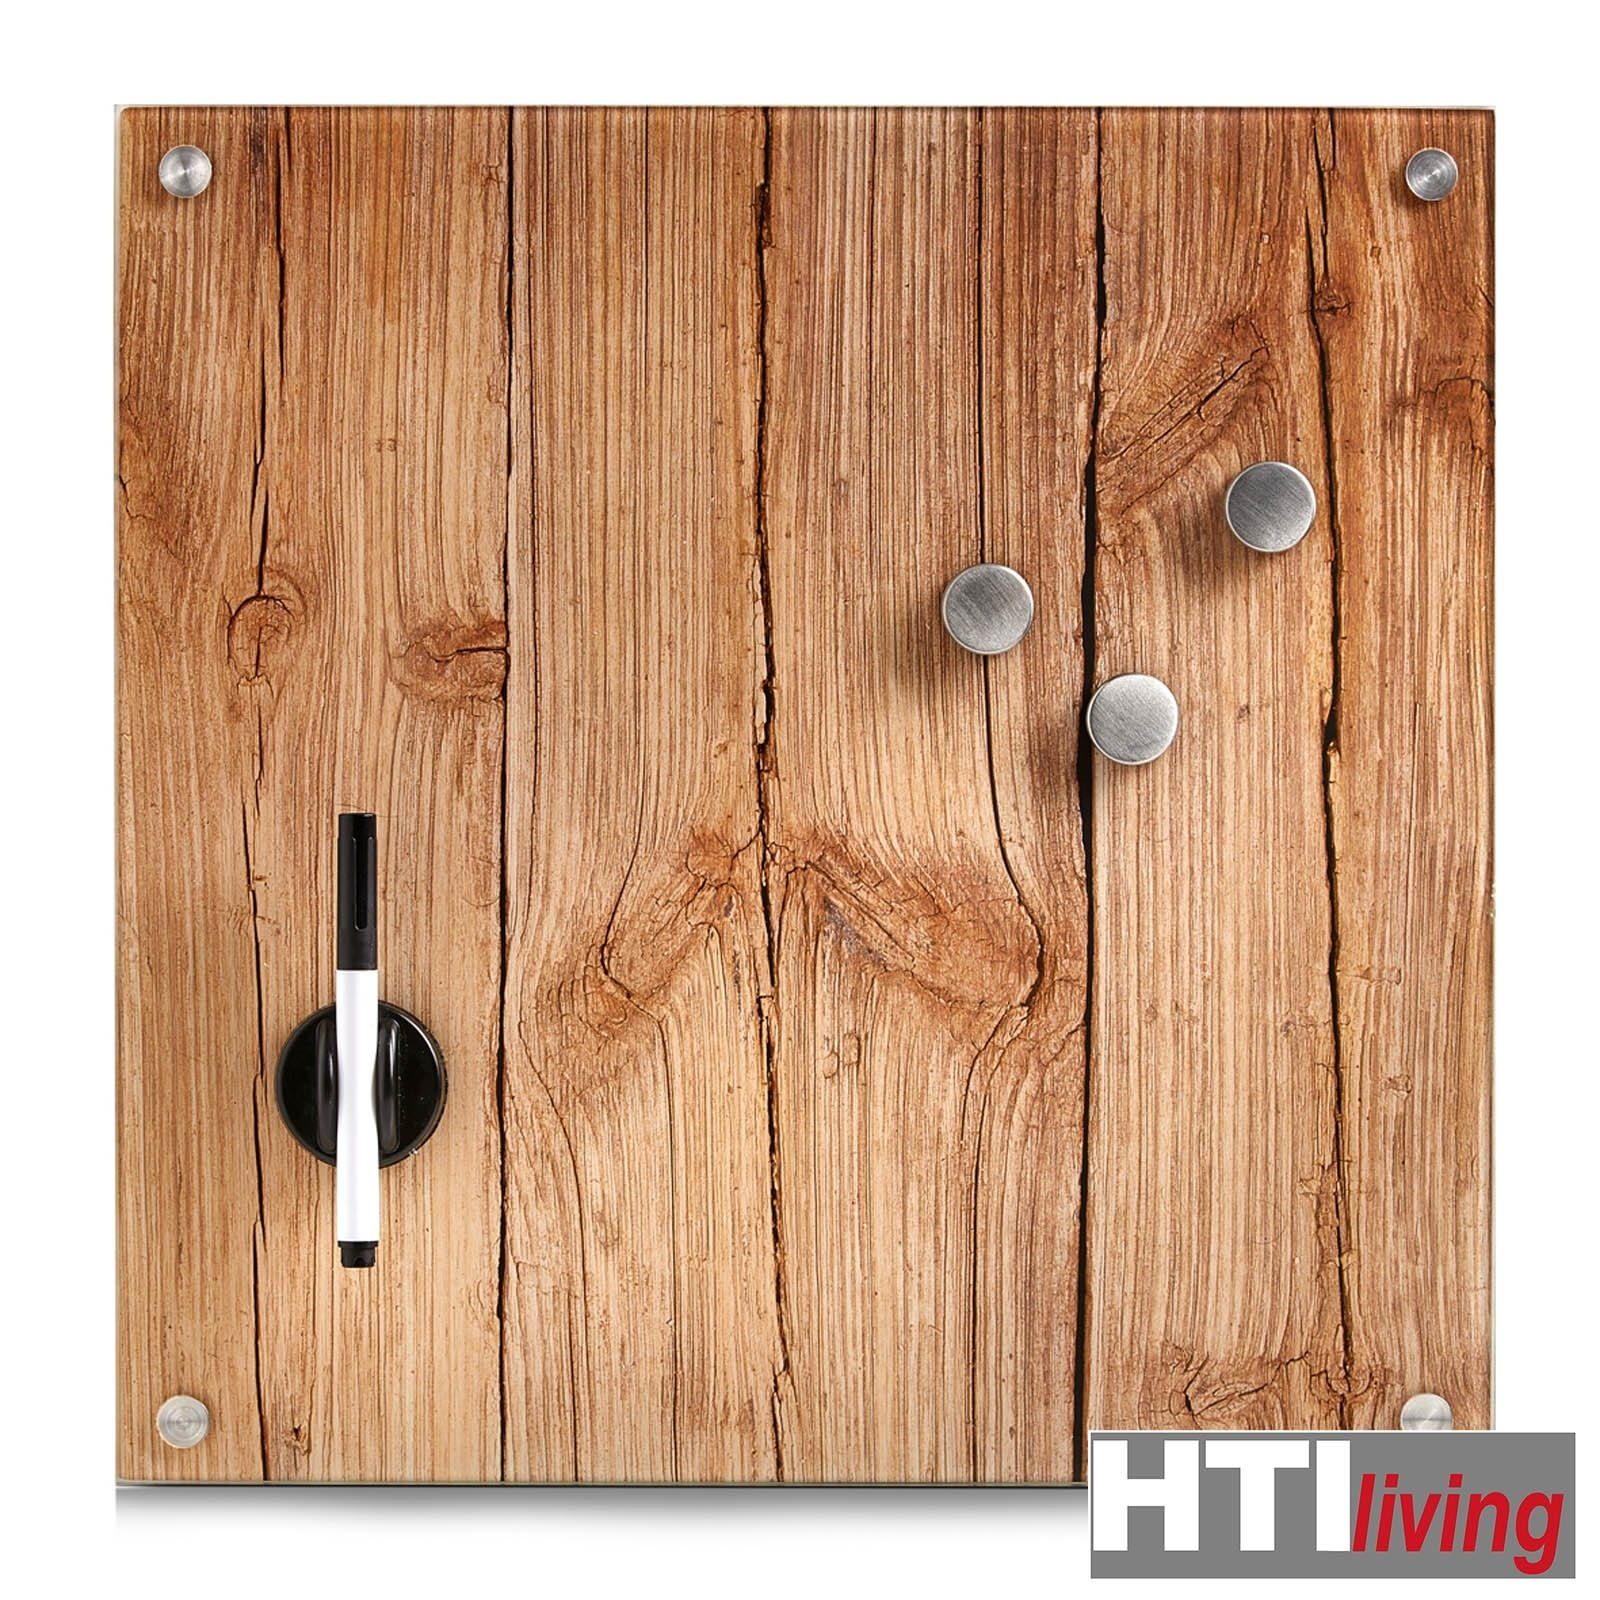 HTI-Living Memoboard Memoboard Pinnwand Wood, Glas Magnetboard Magnettafel Schreibboard Schreibtafel